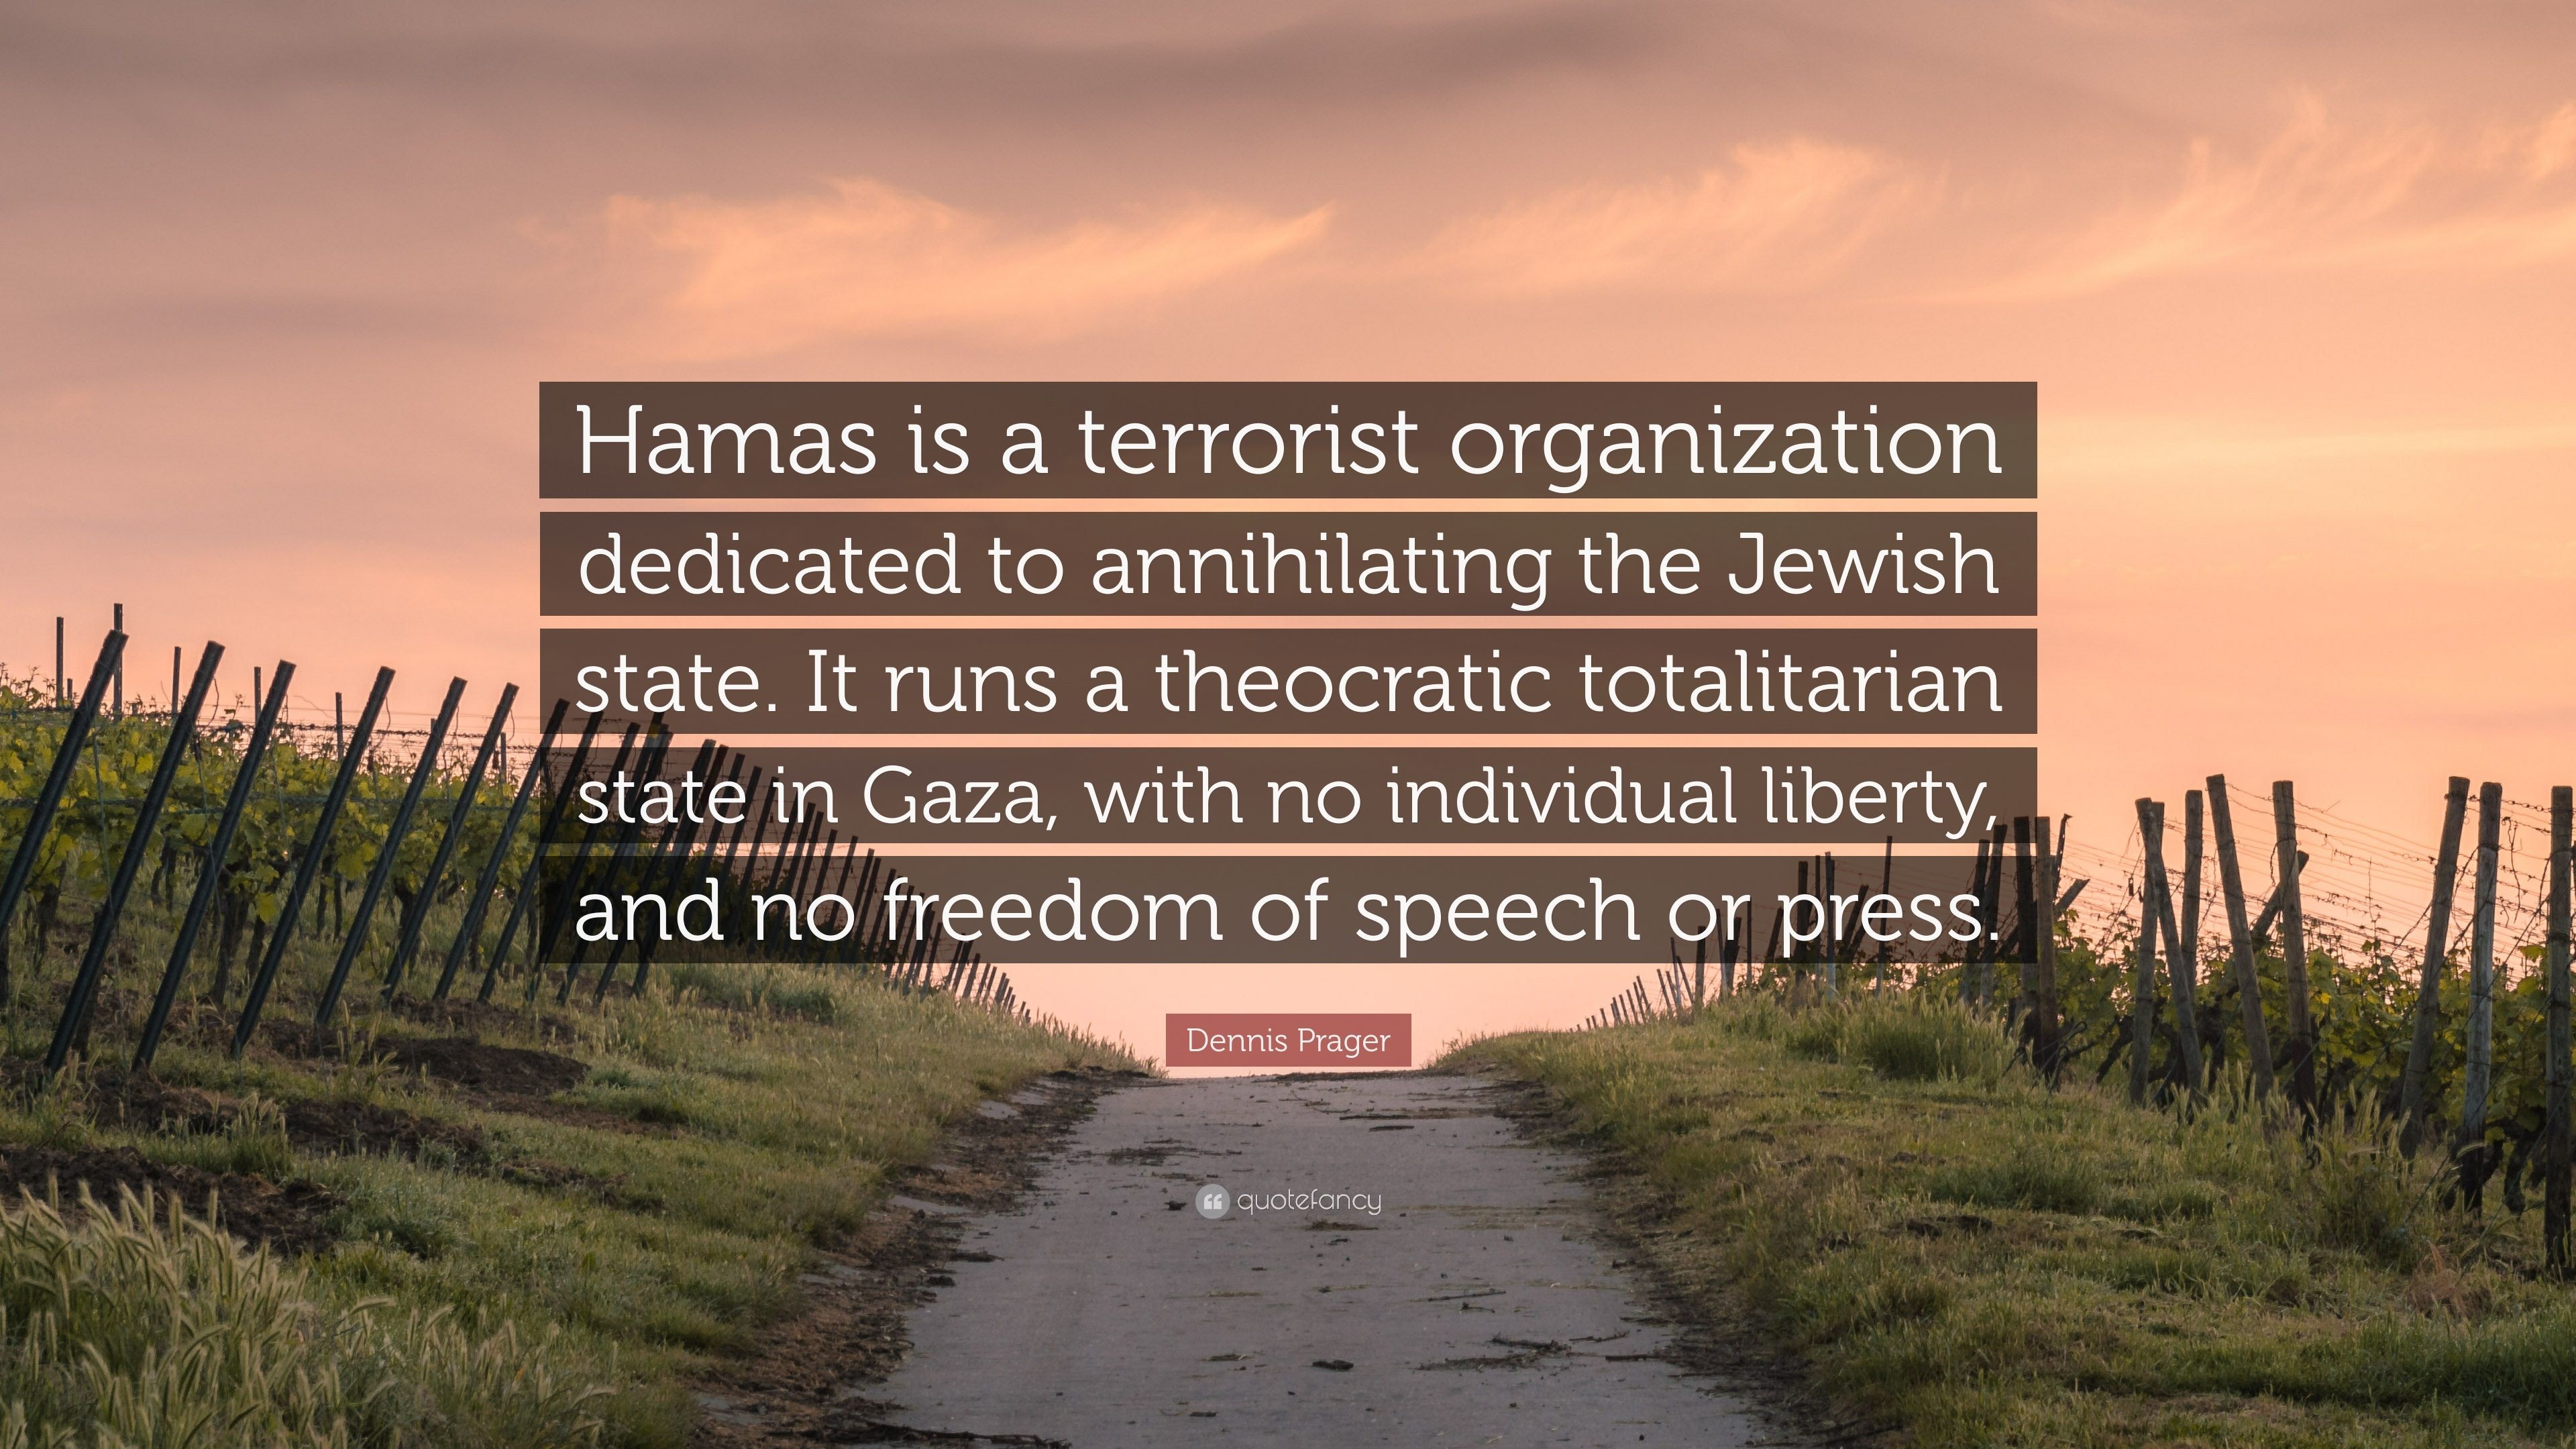 3840x2160 Dennis Prager Quote: “Hamas is a terrorist organization dedicated to  annihilating the Jewish state